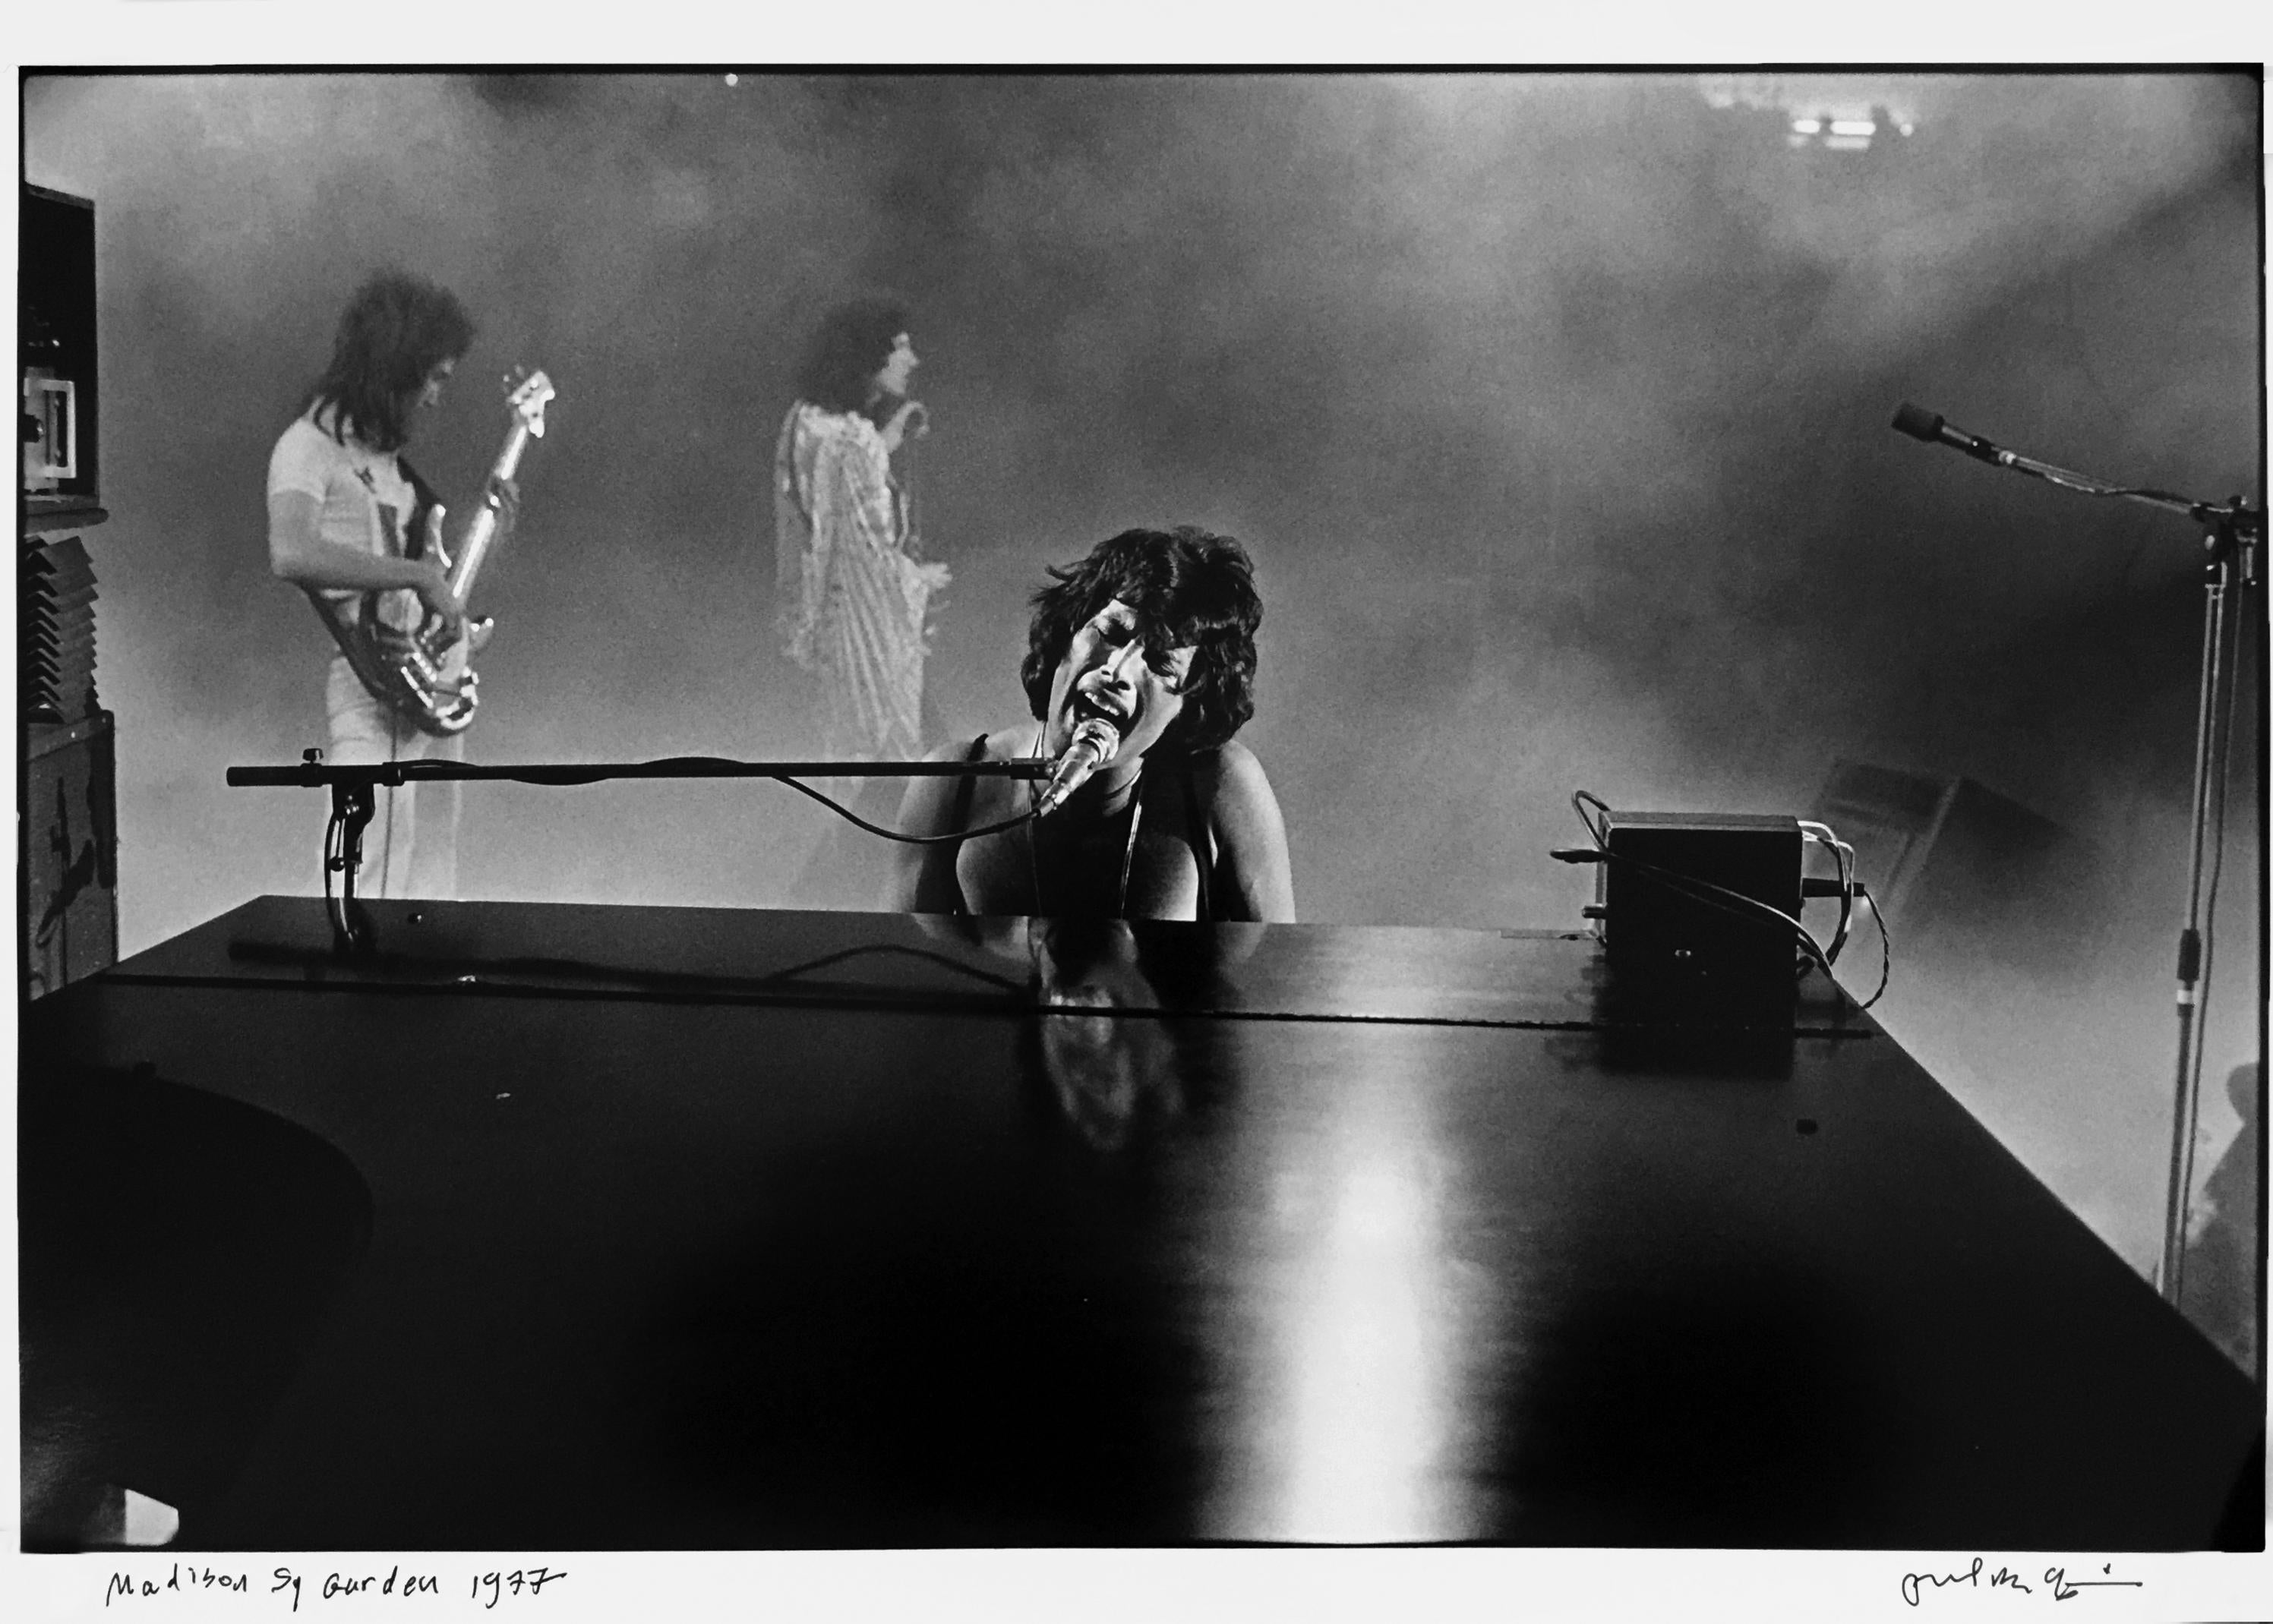 Paul McAlpine Black and White Photograph - Freddie Mercury, Queen